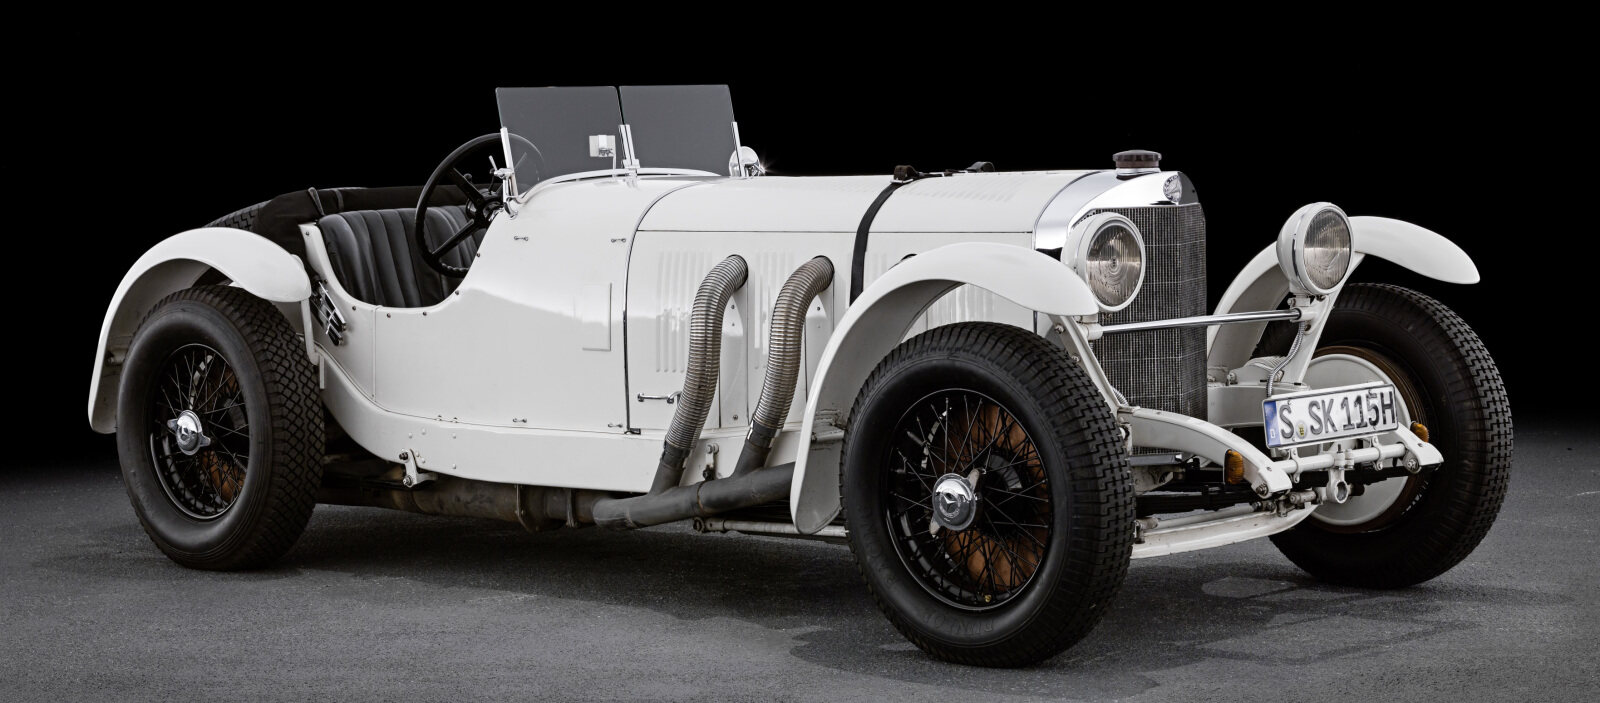 PKW3000000000 Mercedes-Benz Passenger Cars, 1926 until 1945